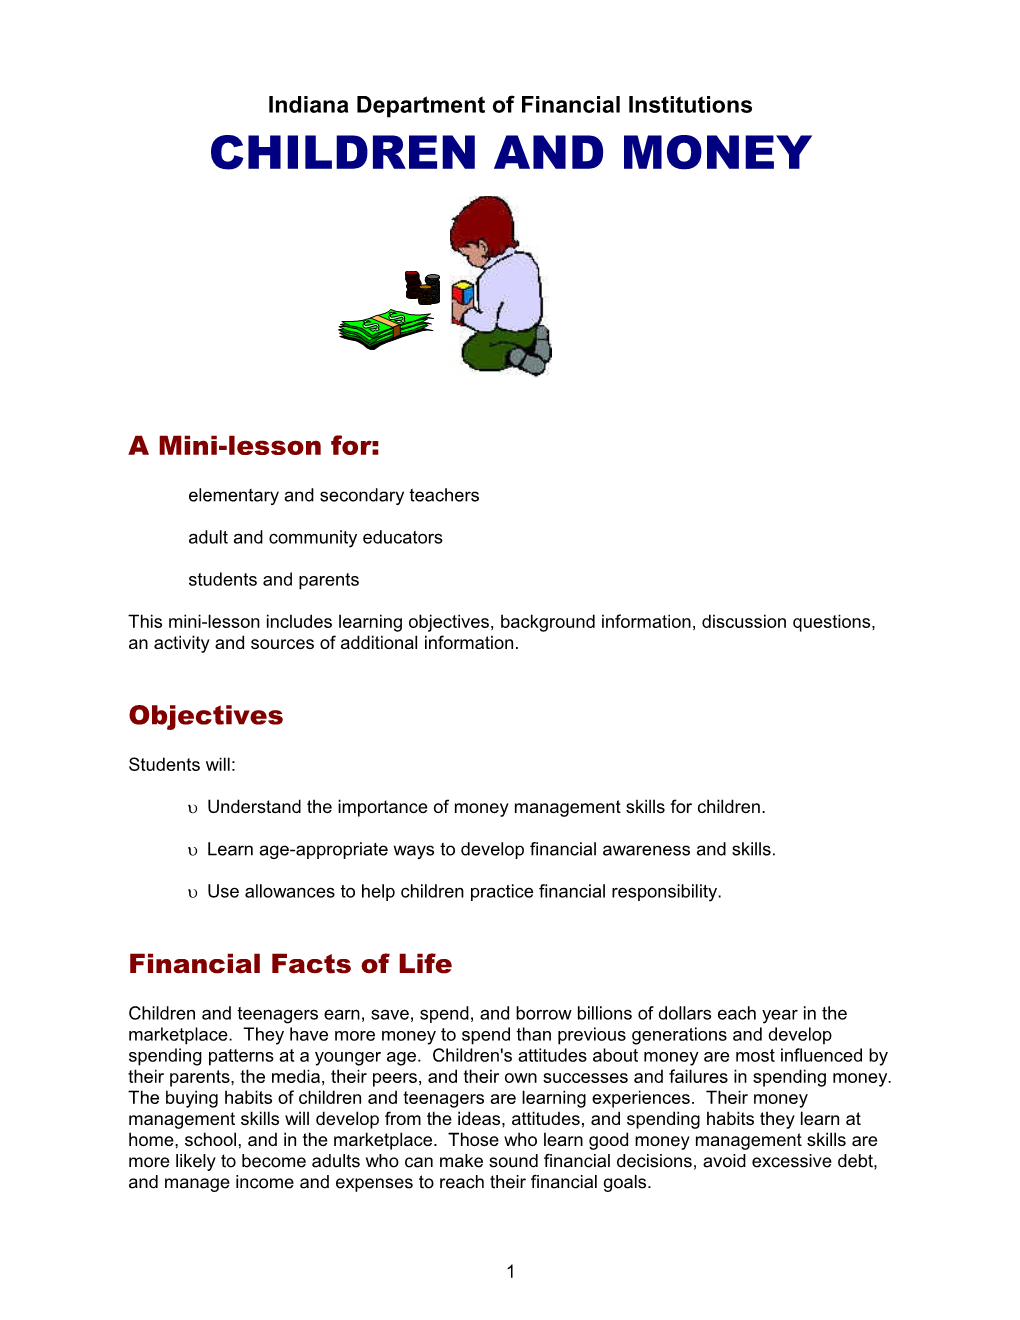 Children and Money s1